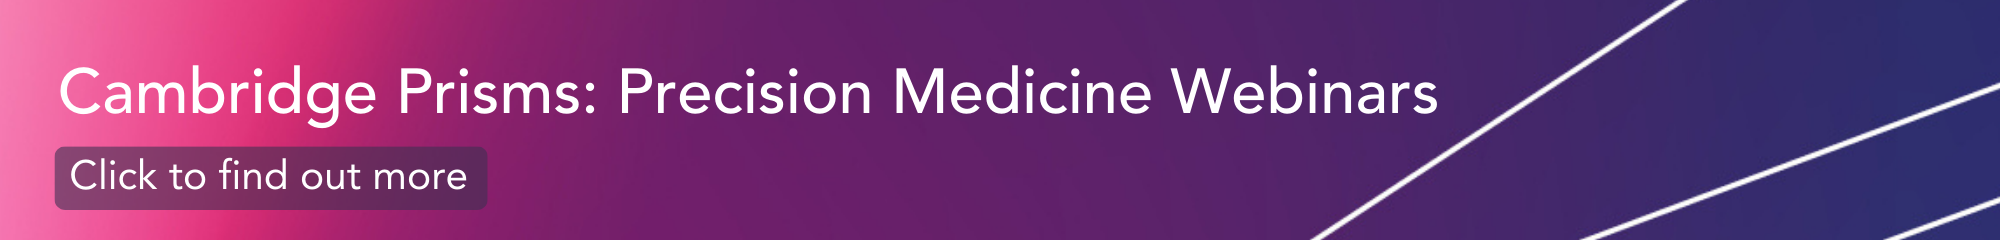 Precision Medicine Webinar Series Banner